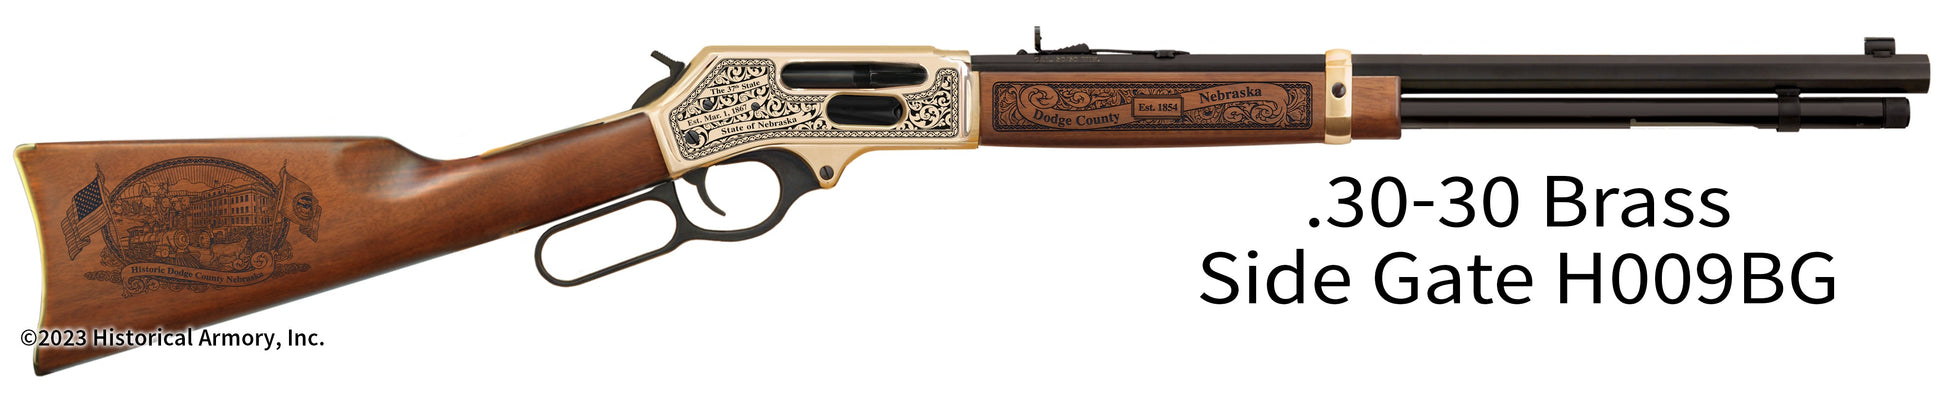 Dodge County Nebraska Engraved Henry .30-30 Brass Side Gate Rifle